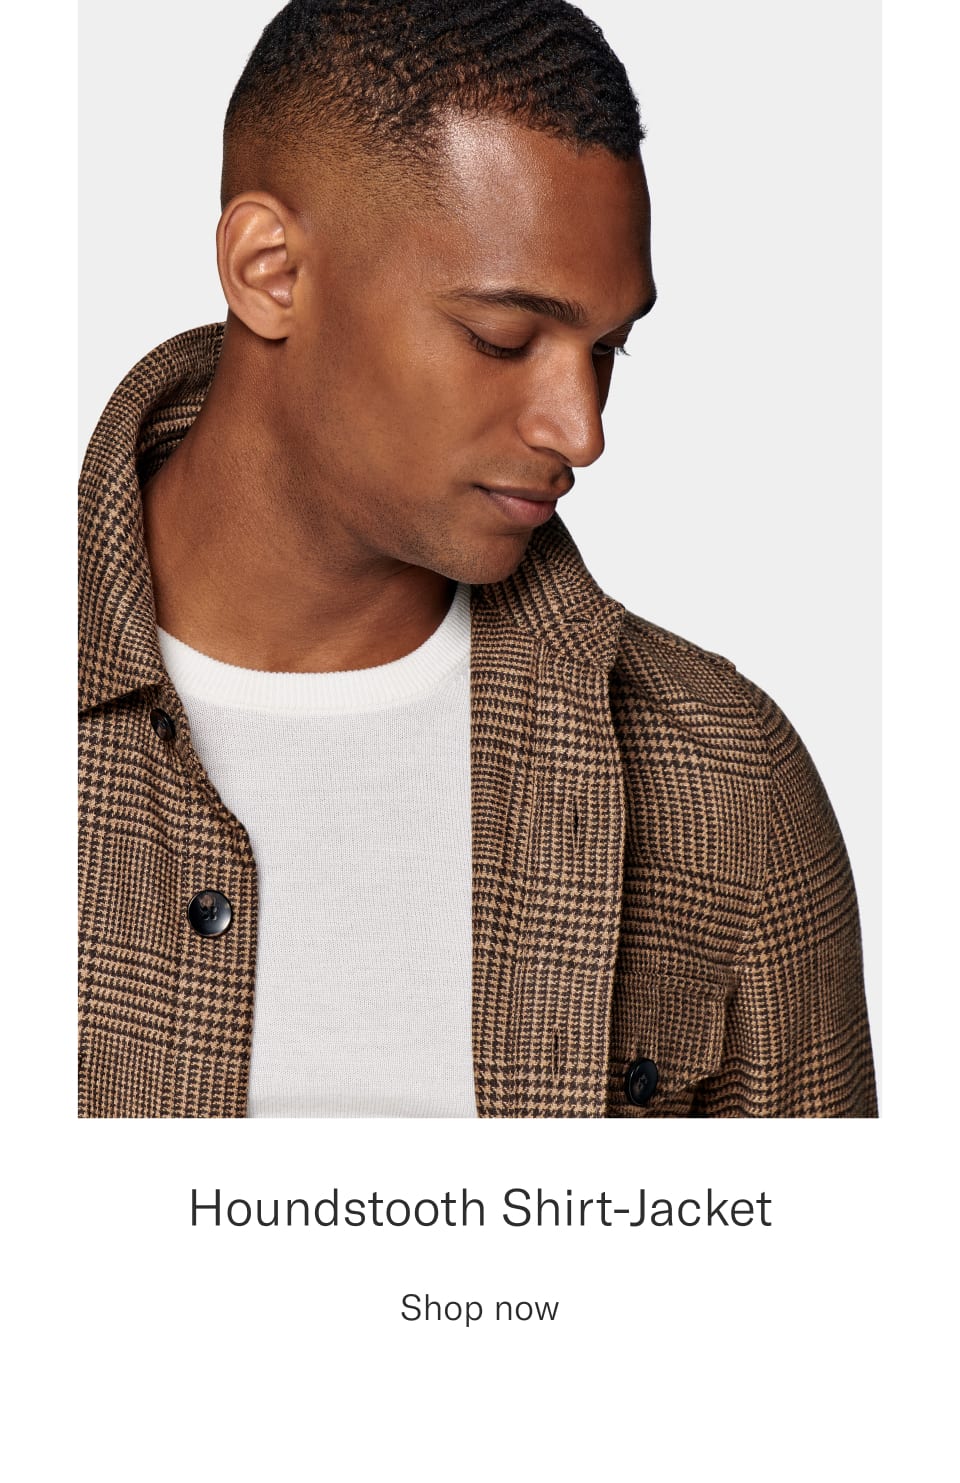 Houndstooth Shirt-Jacket